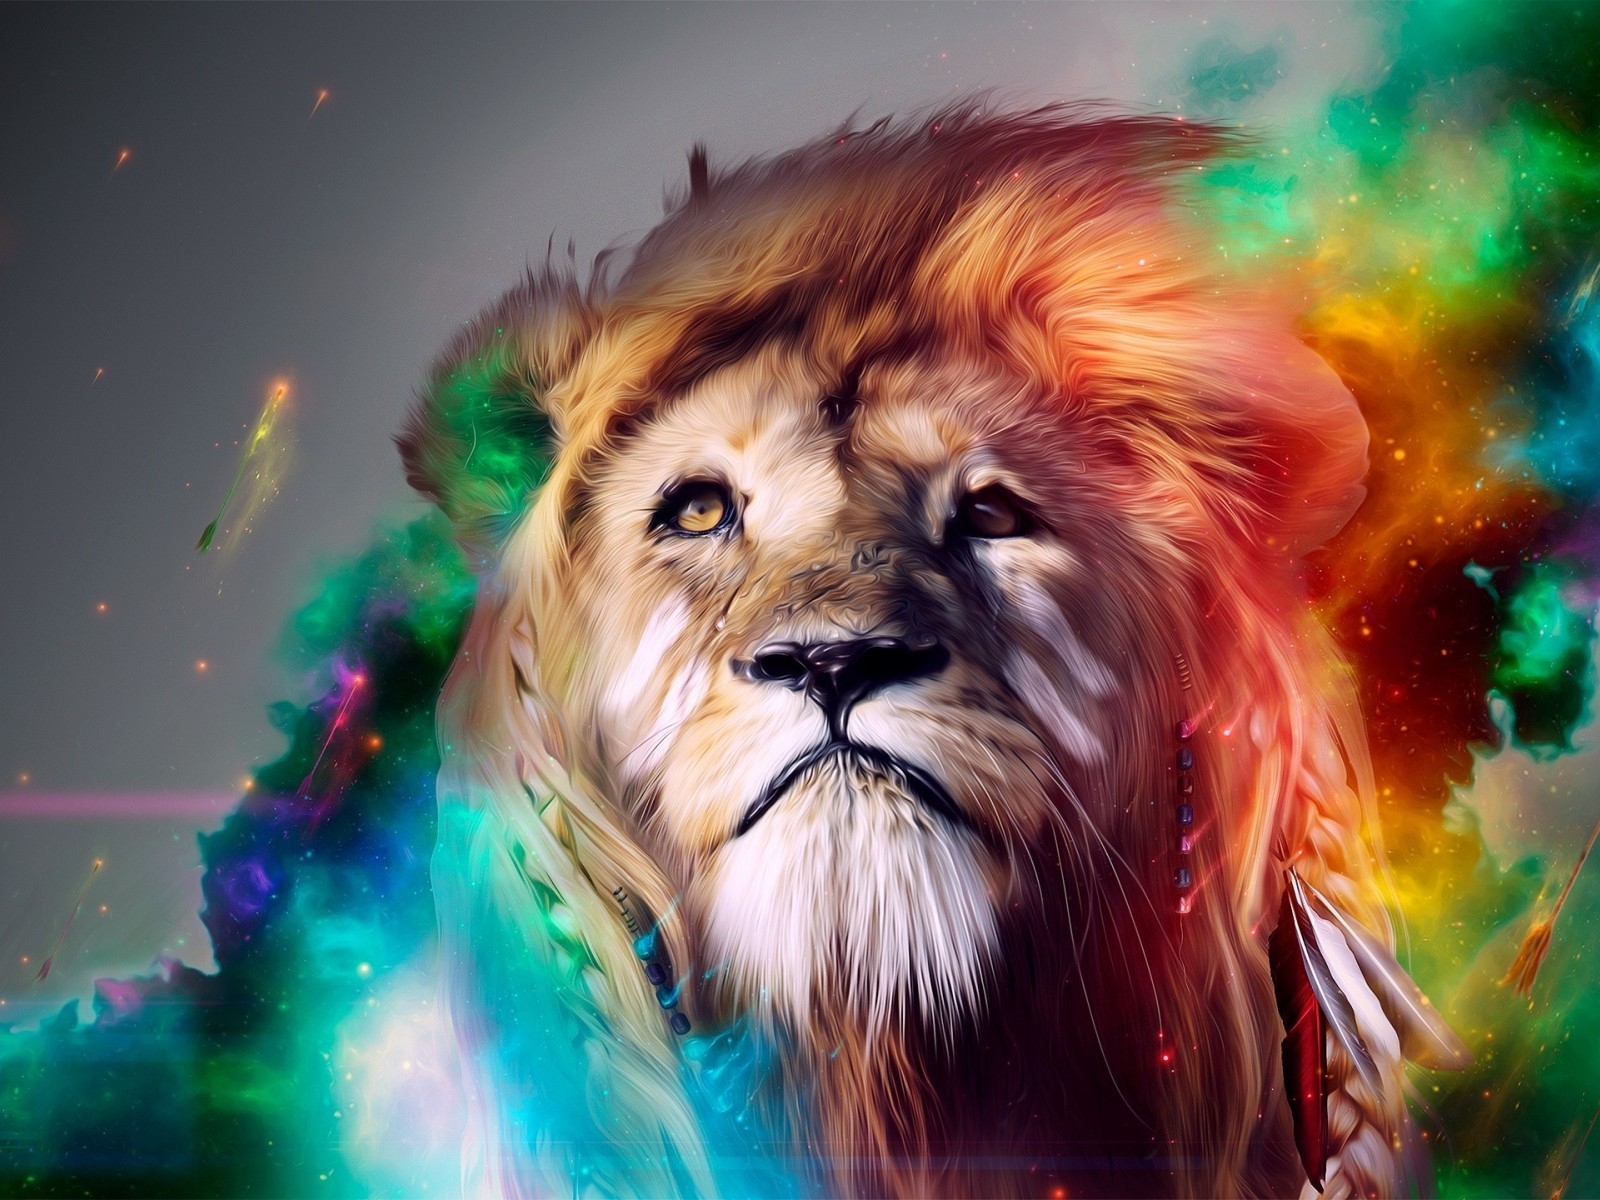 Rainbow Lion for 1600 x 1200 resolution